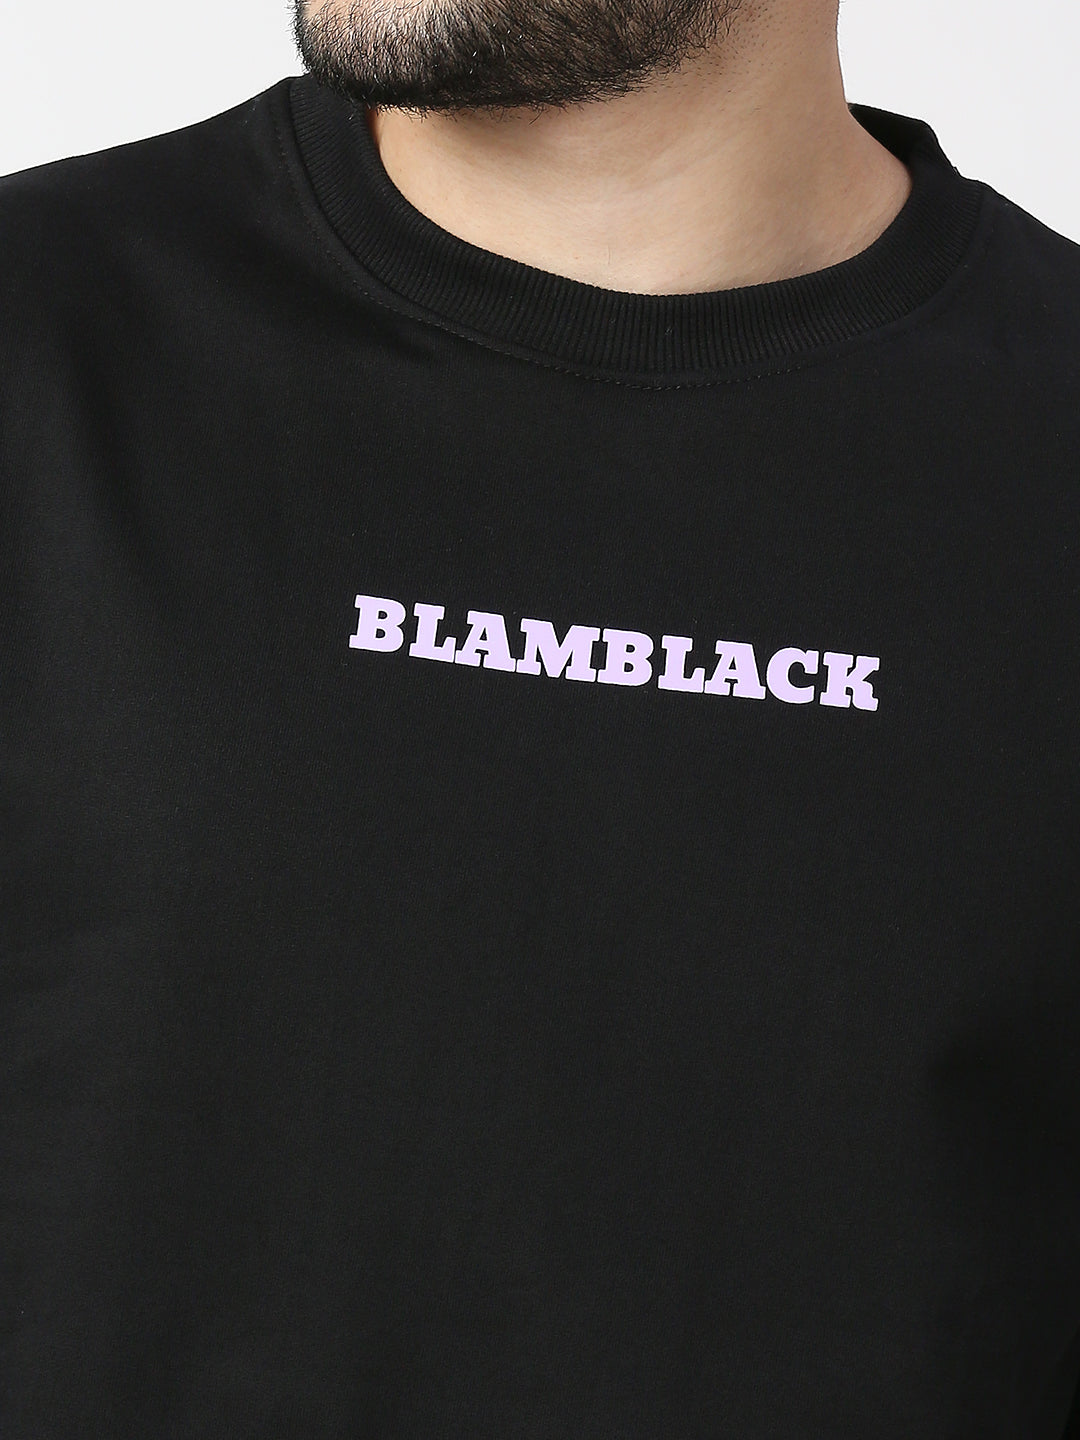 Buy Blamblack Monochrome Black Baggy Co-ord set